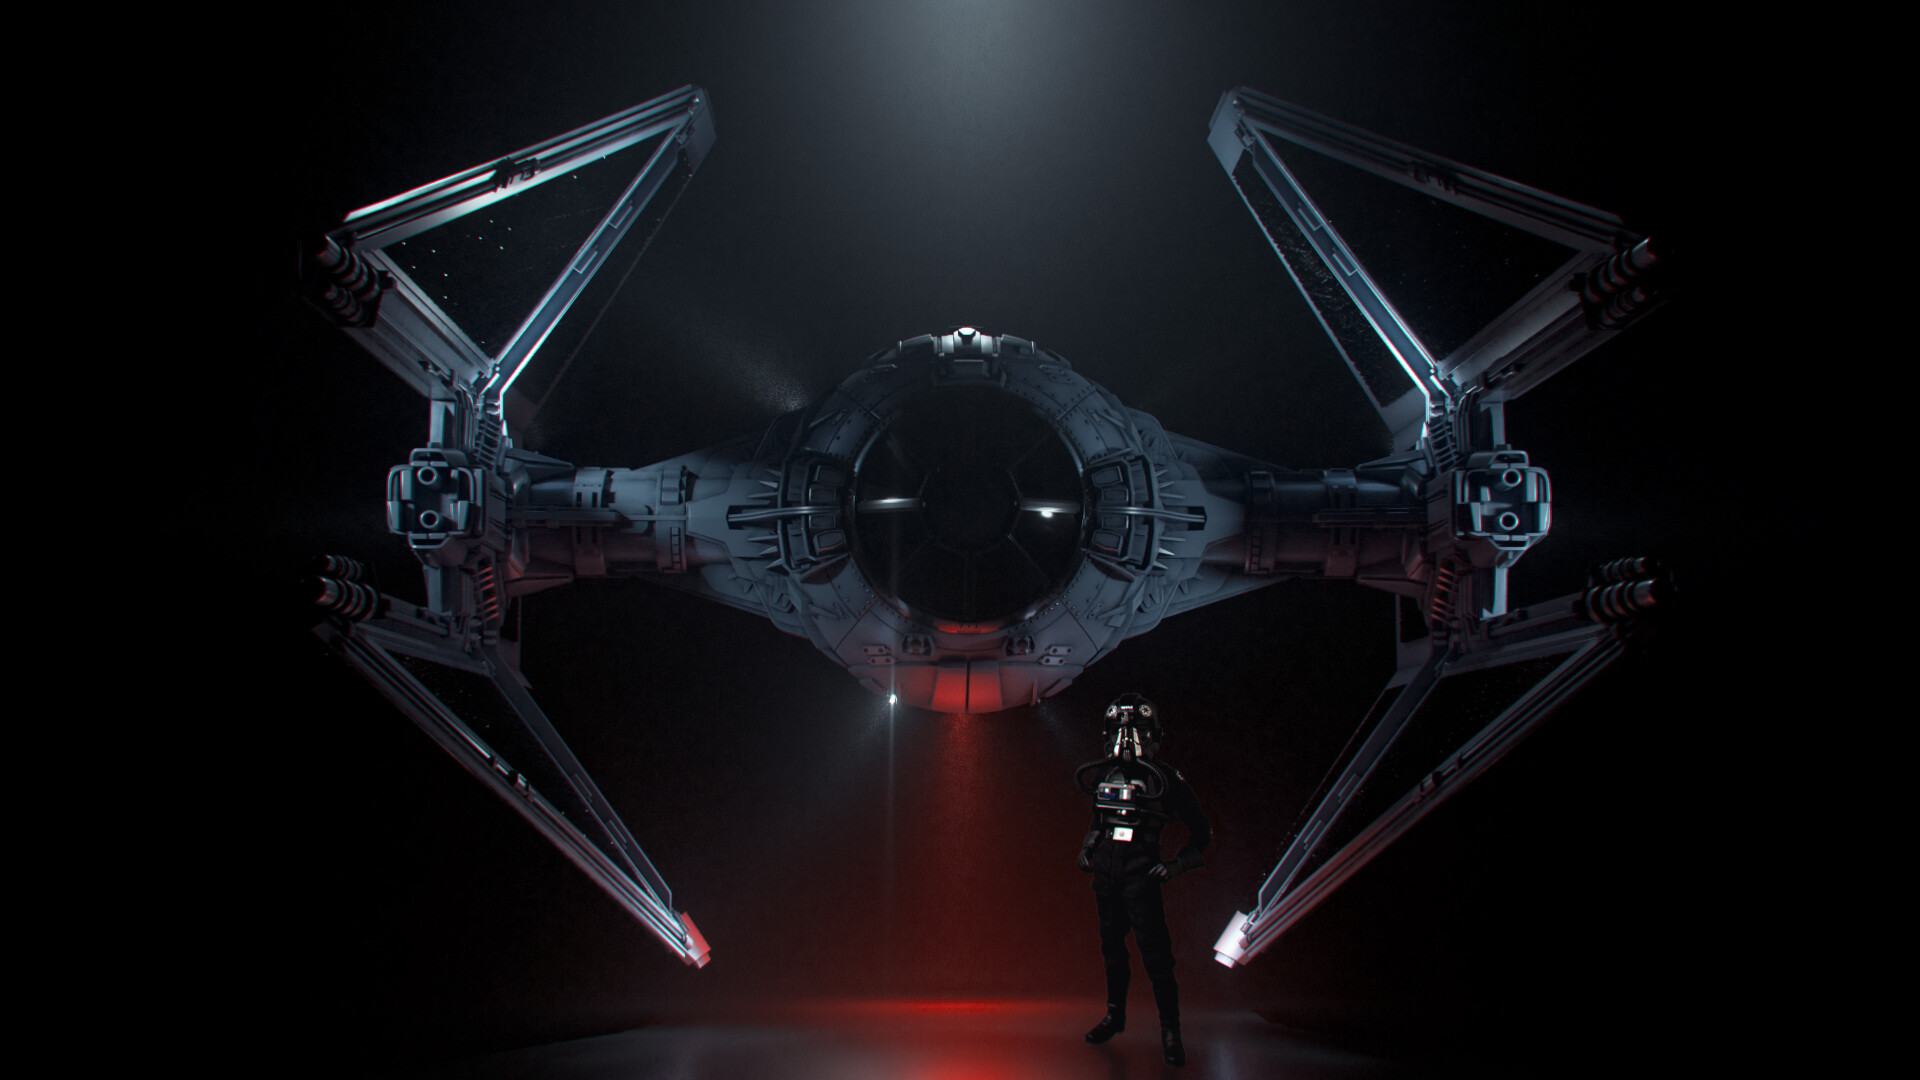 Star Wars Imperial Forces Star Wars Ships Digital Art TiE Fighter Pilot Vehicle Spaceship Dark Backg 1920x1080